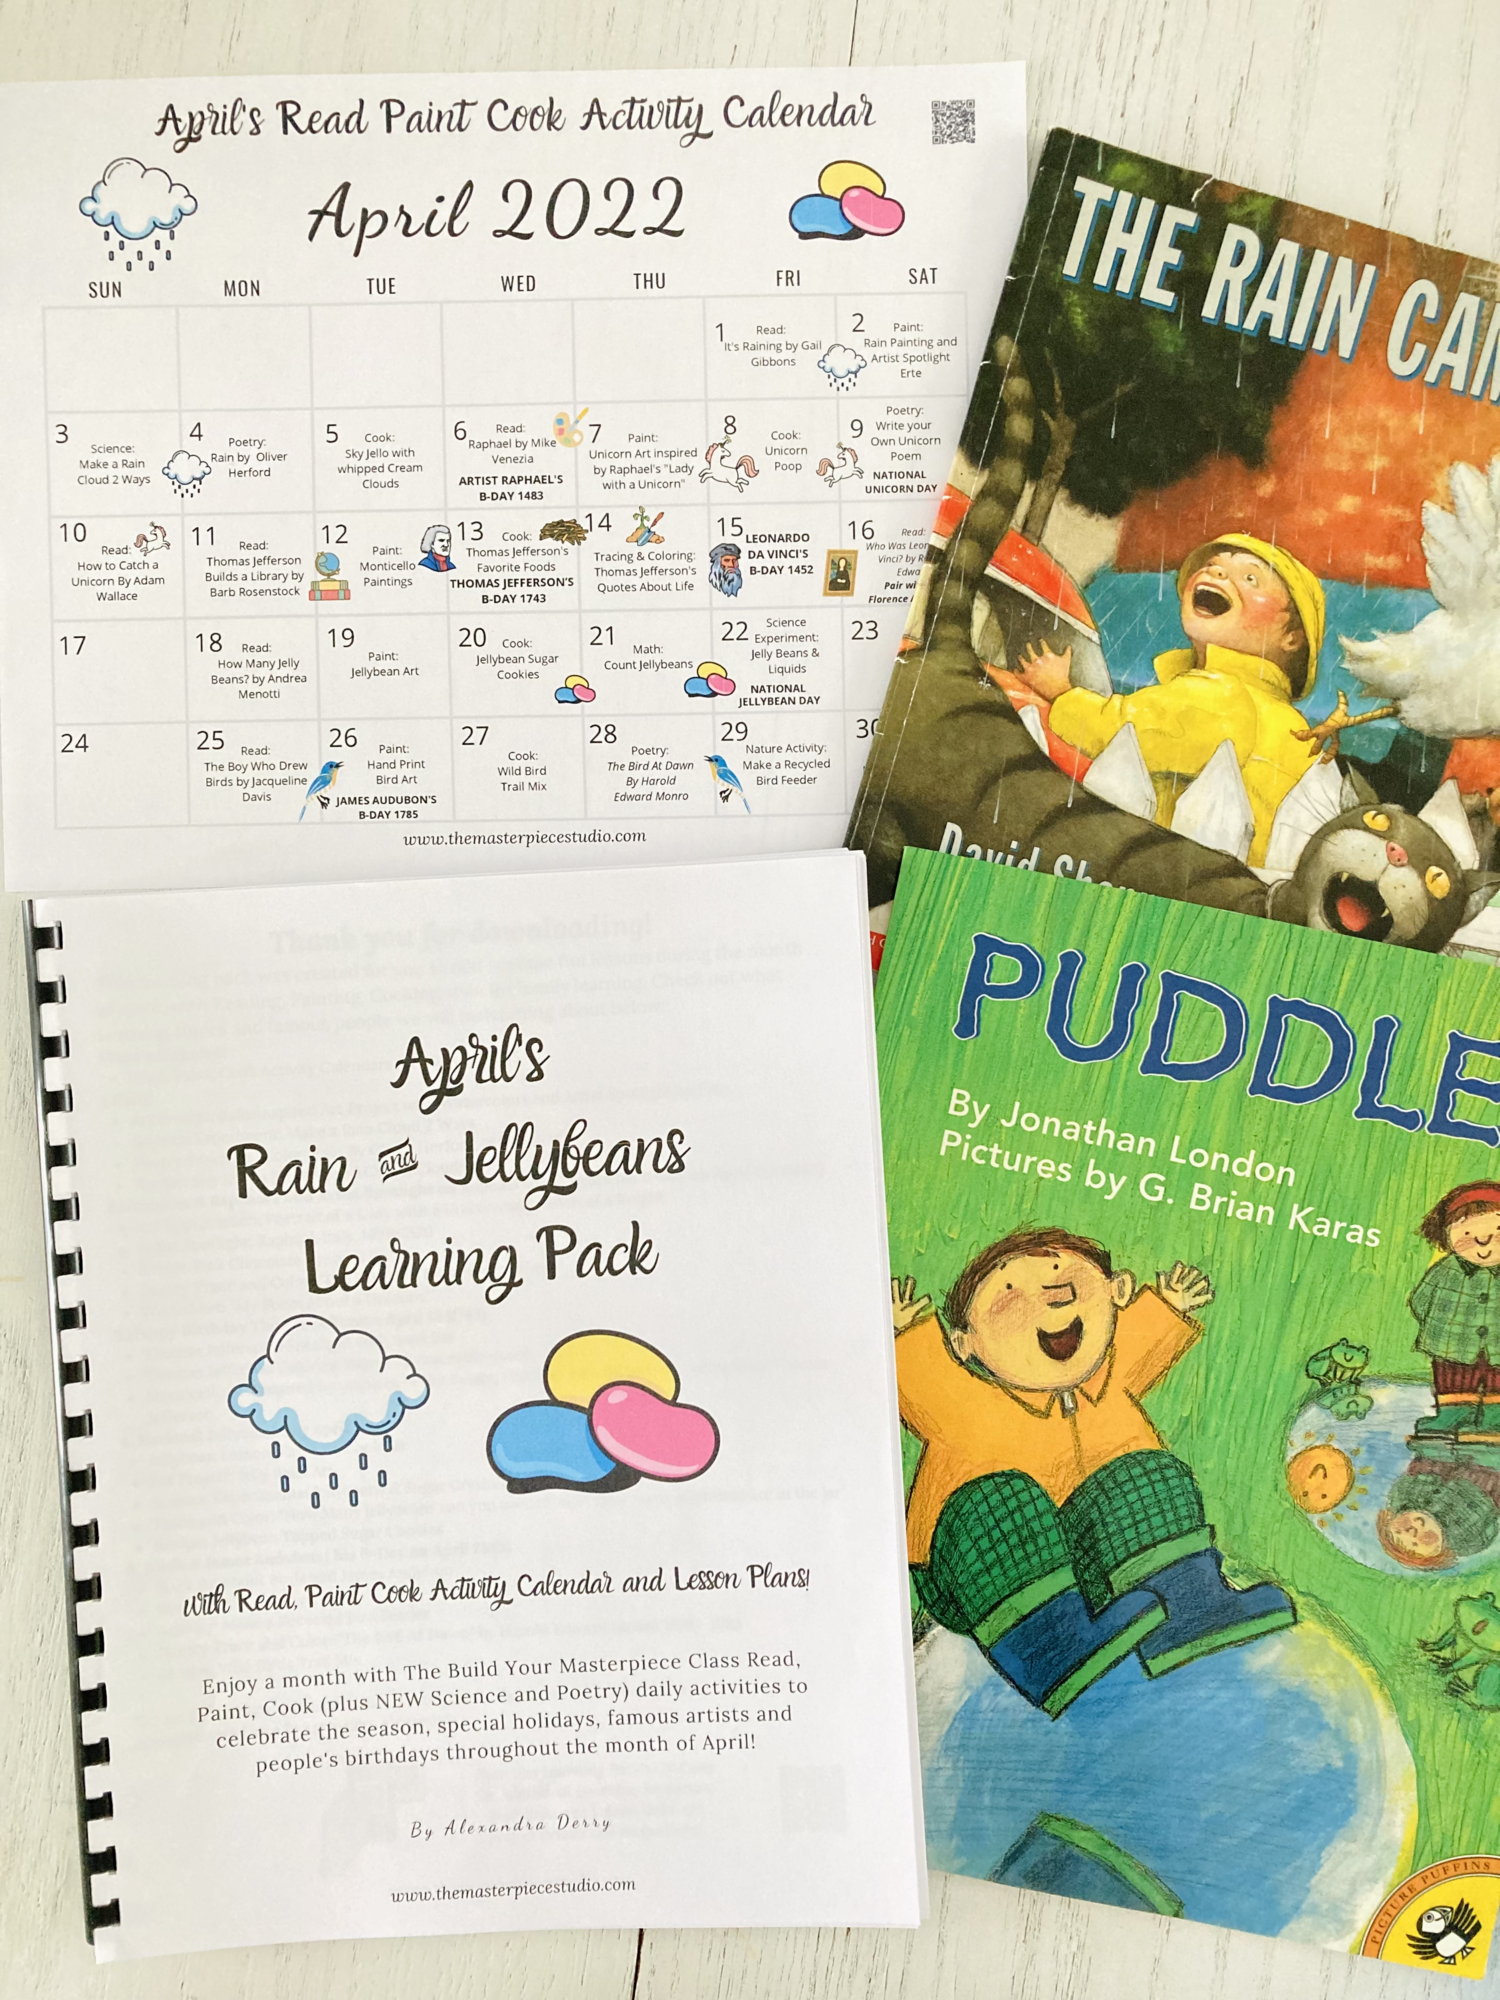 April's Rain & Jellybeans Learning Pack